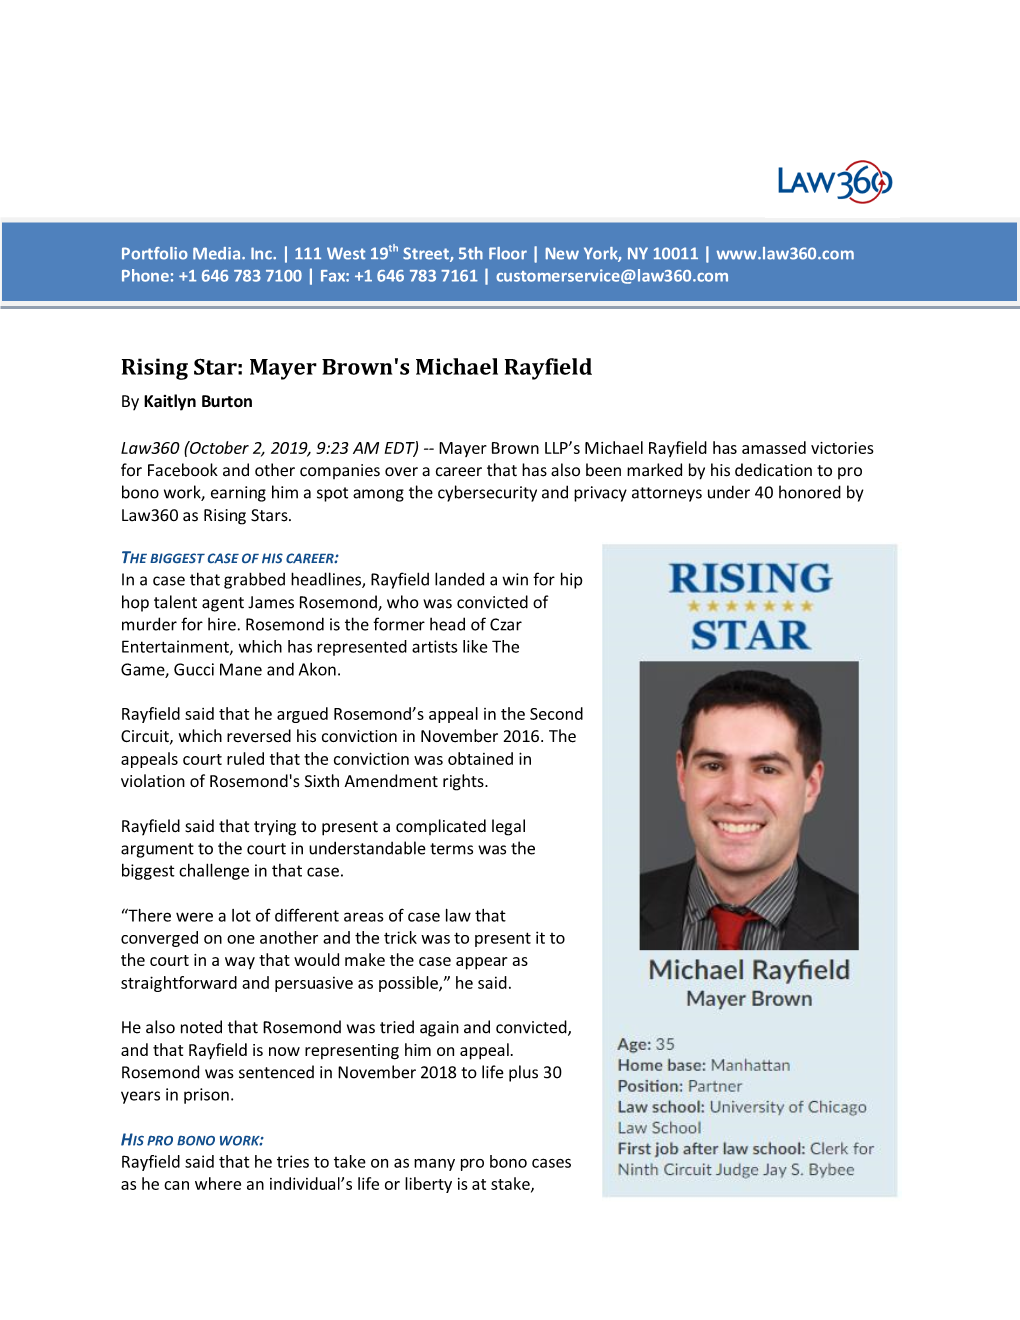 Rising Star: Mayer Brown's Michael Rayfield by Kaitlyn Burton